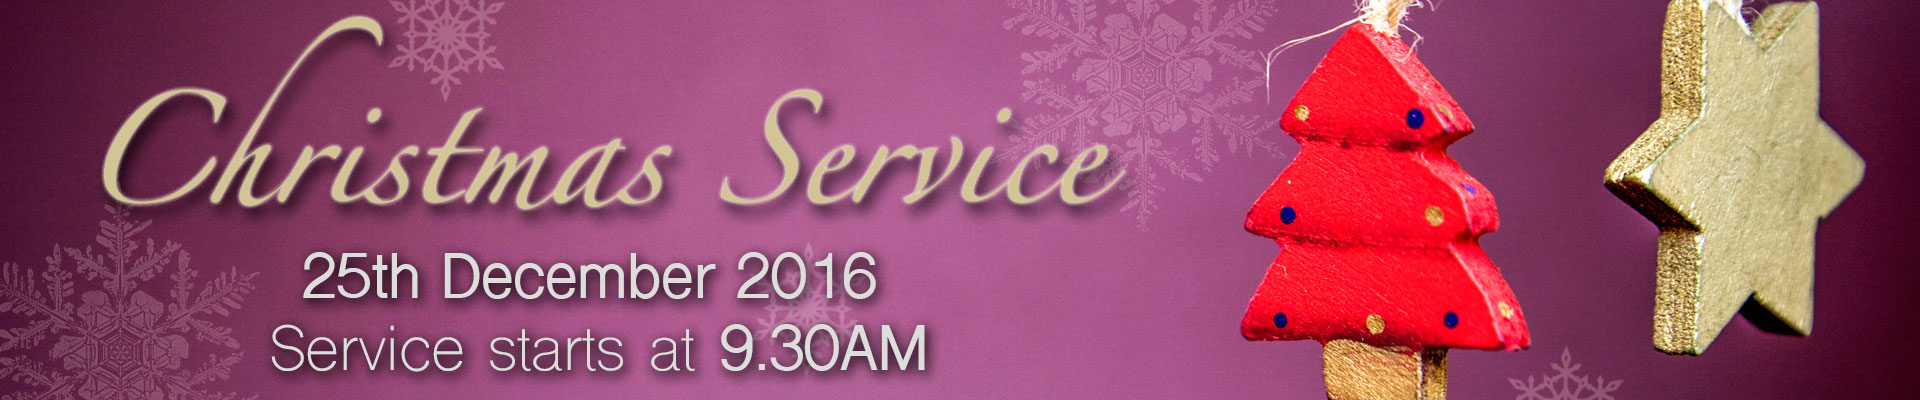 Christmas Service 2016